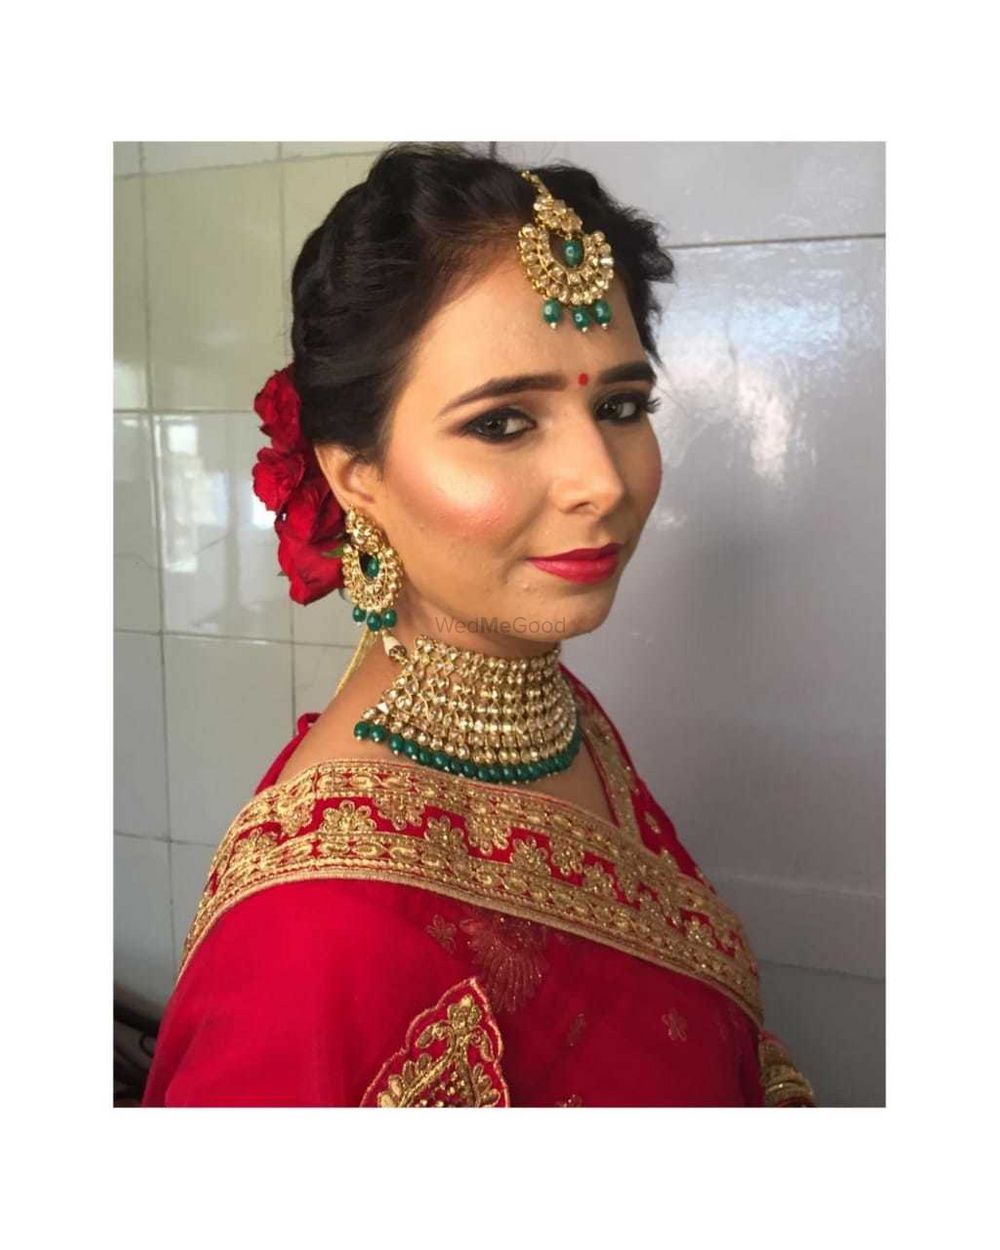 Photo By Bharati Bridal Makeover - Bridal Makeup